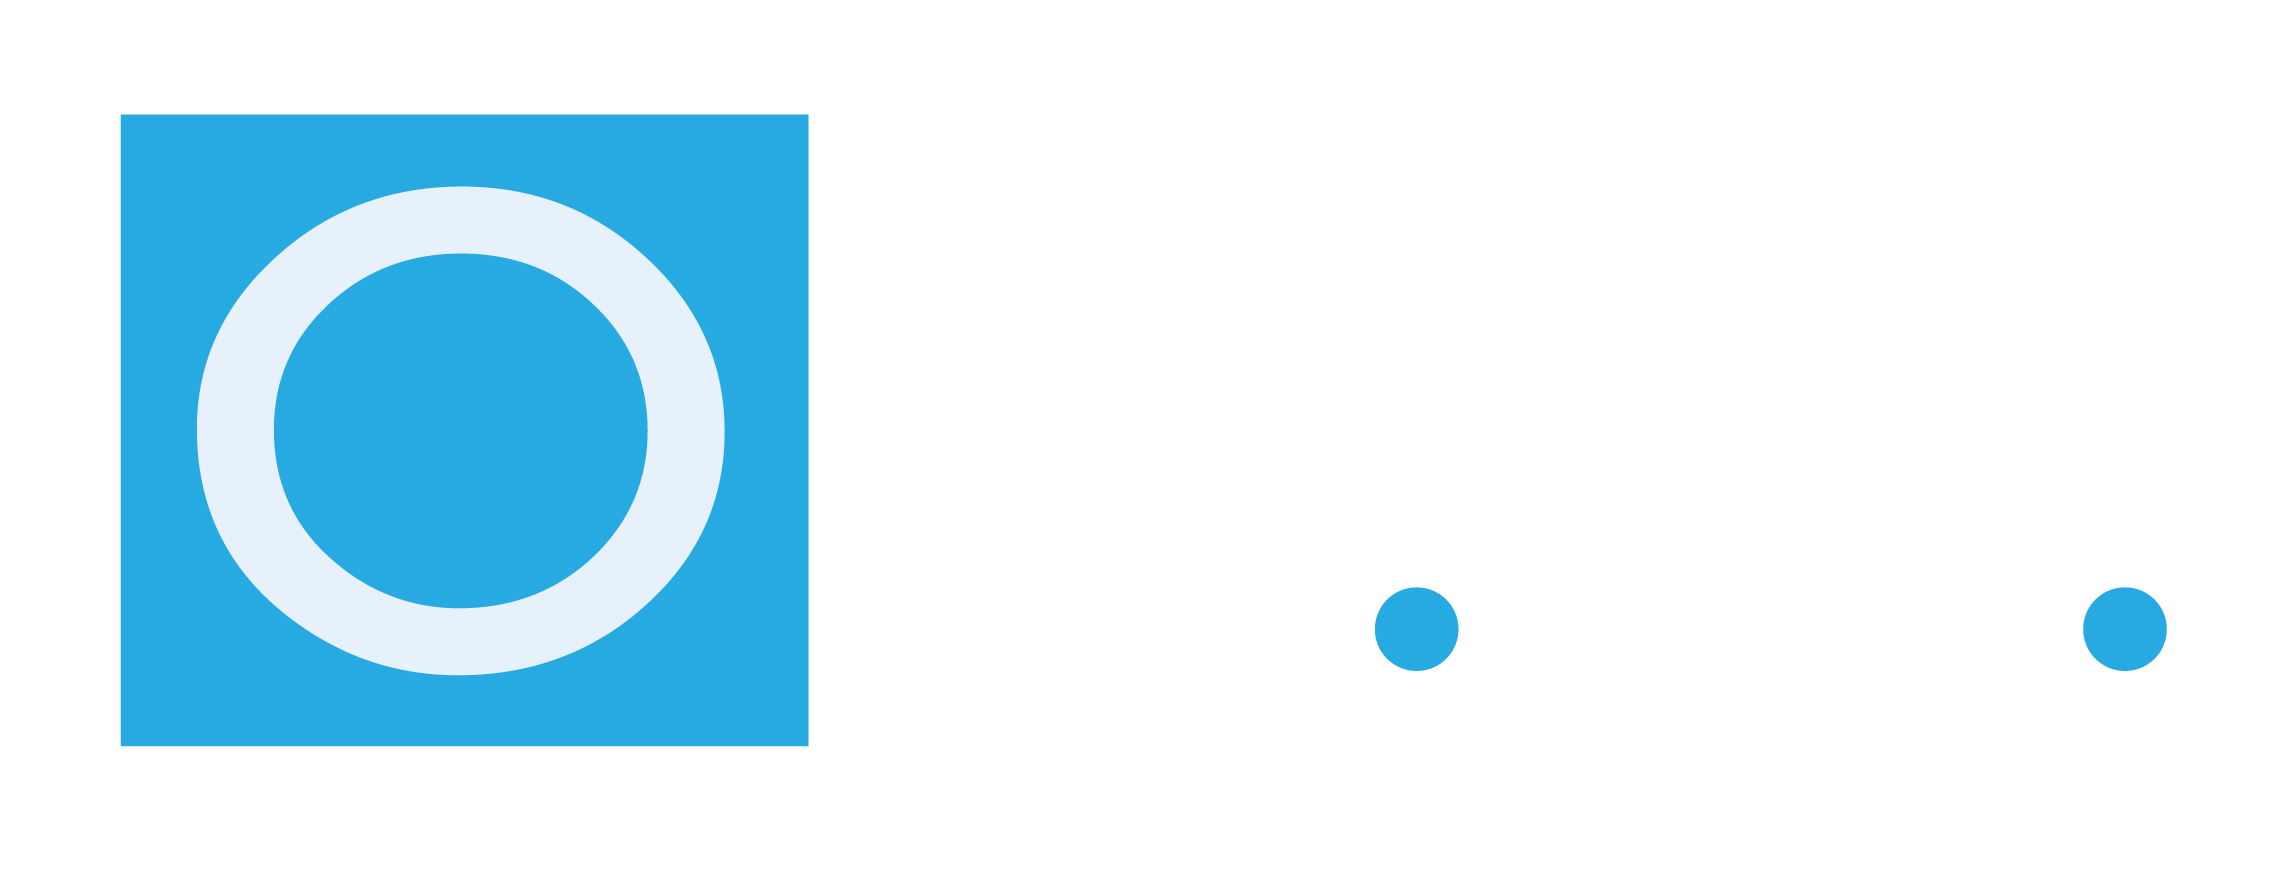 OBC logo